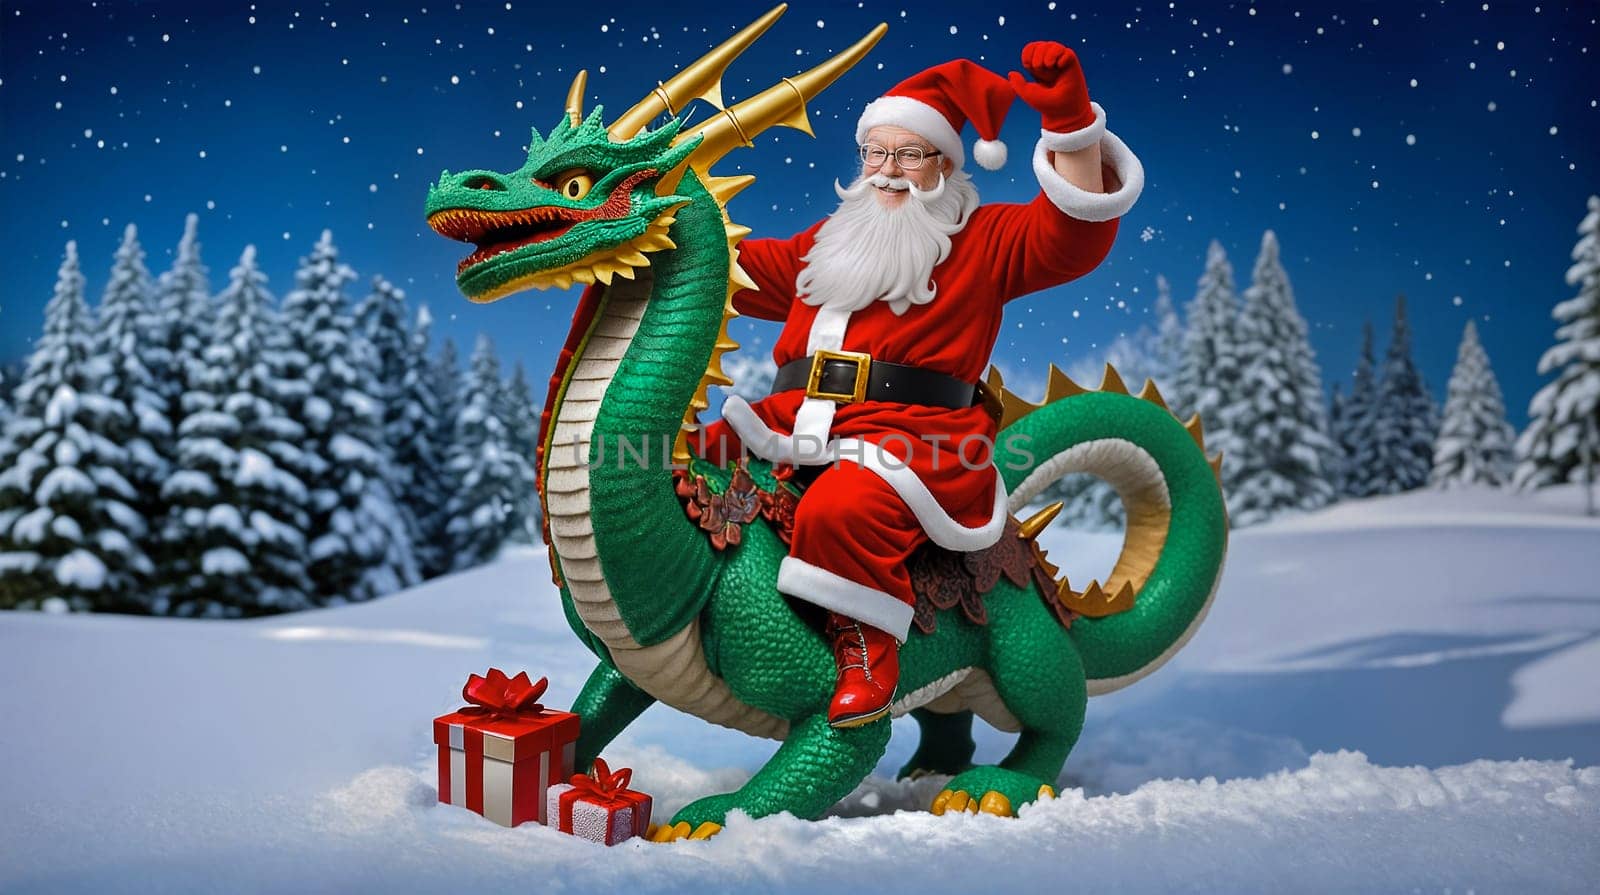 Santa on the Green Dragon by rommma